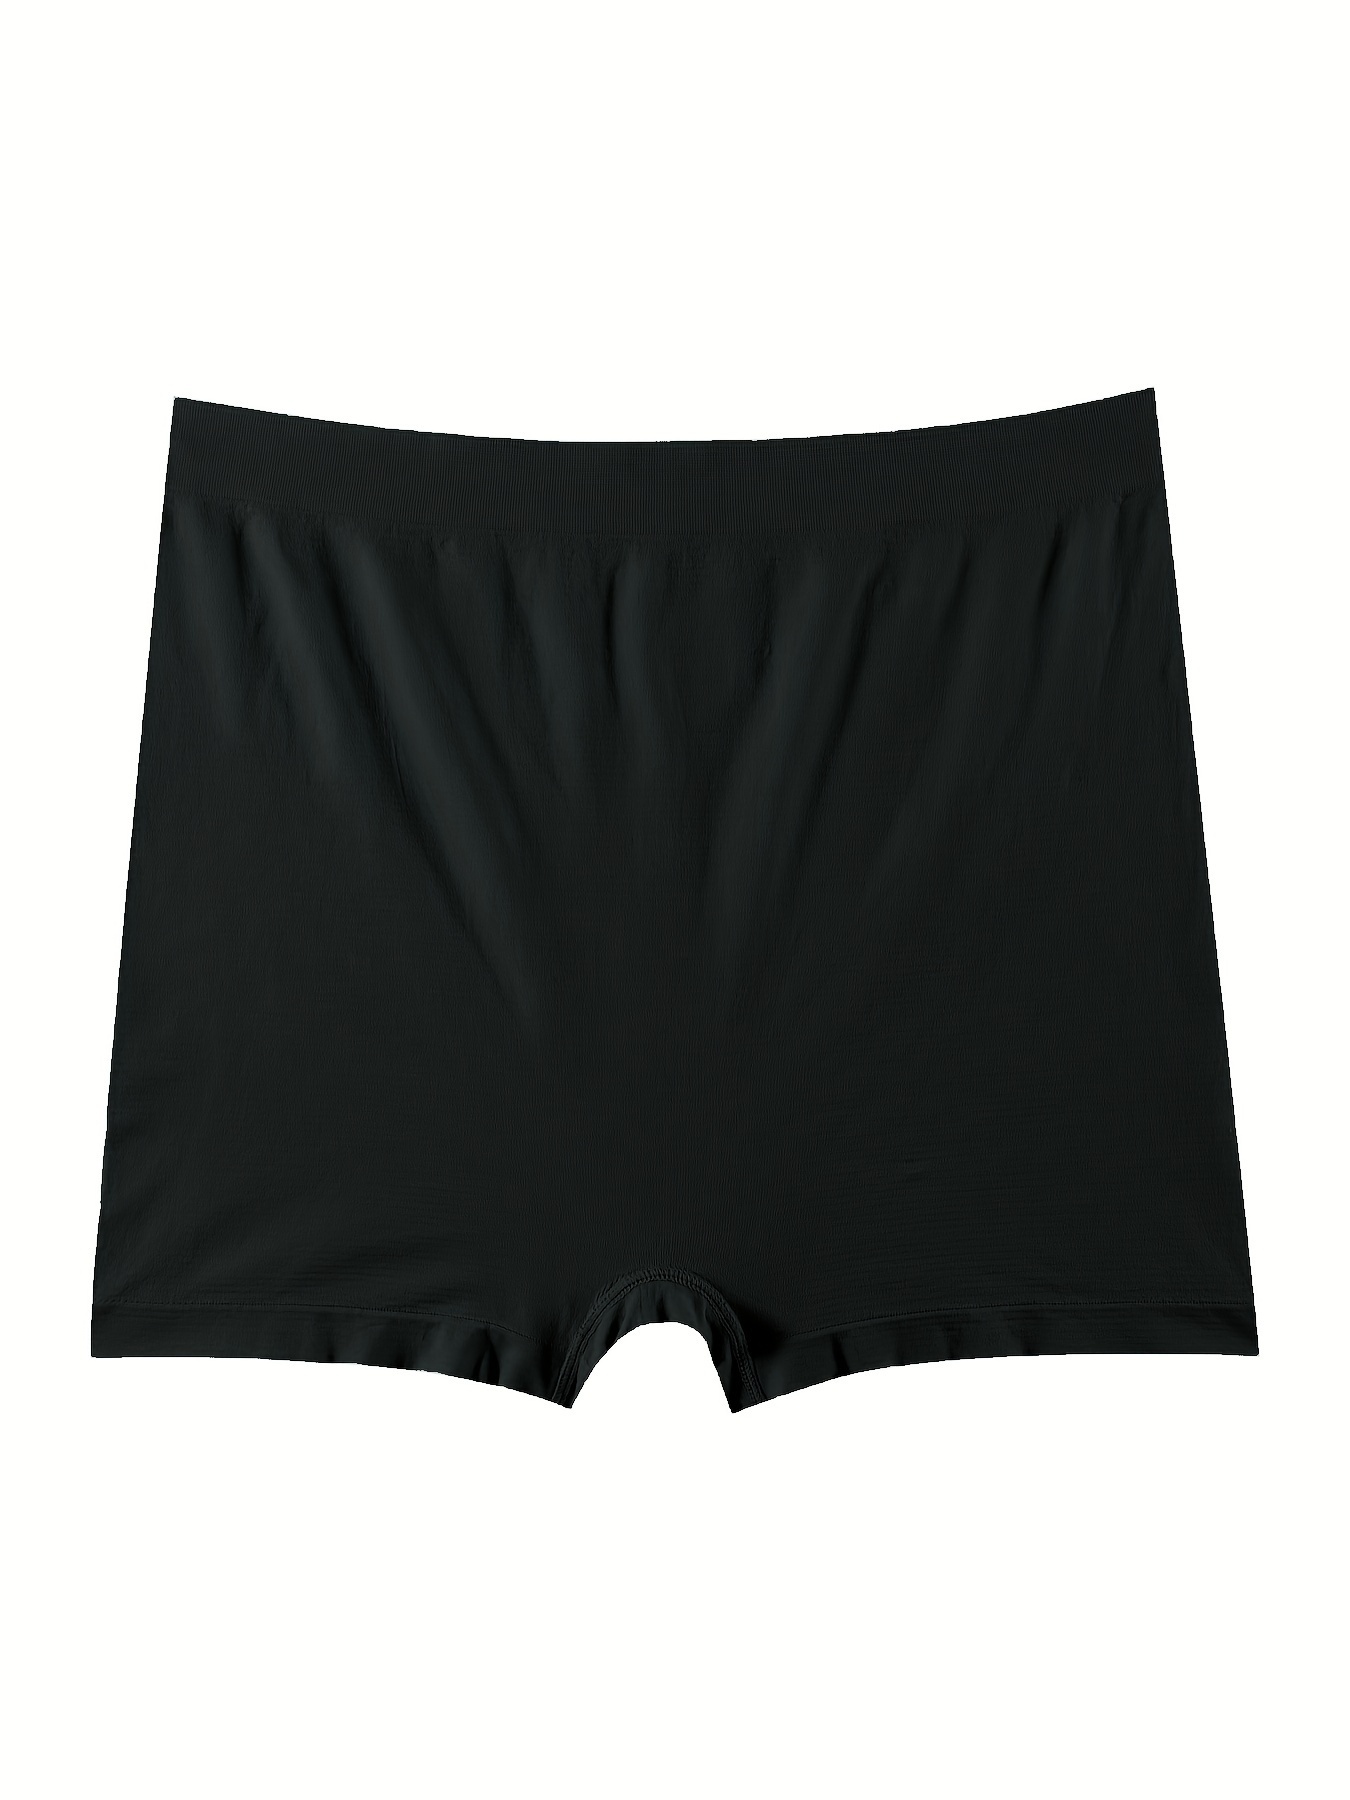 Seamless Ice Silk Underwear Boy Shorts Panties for Women - Set of